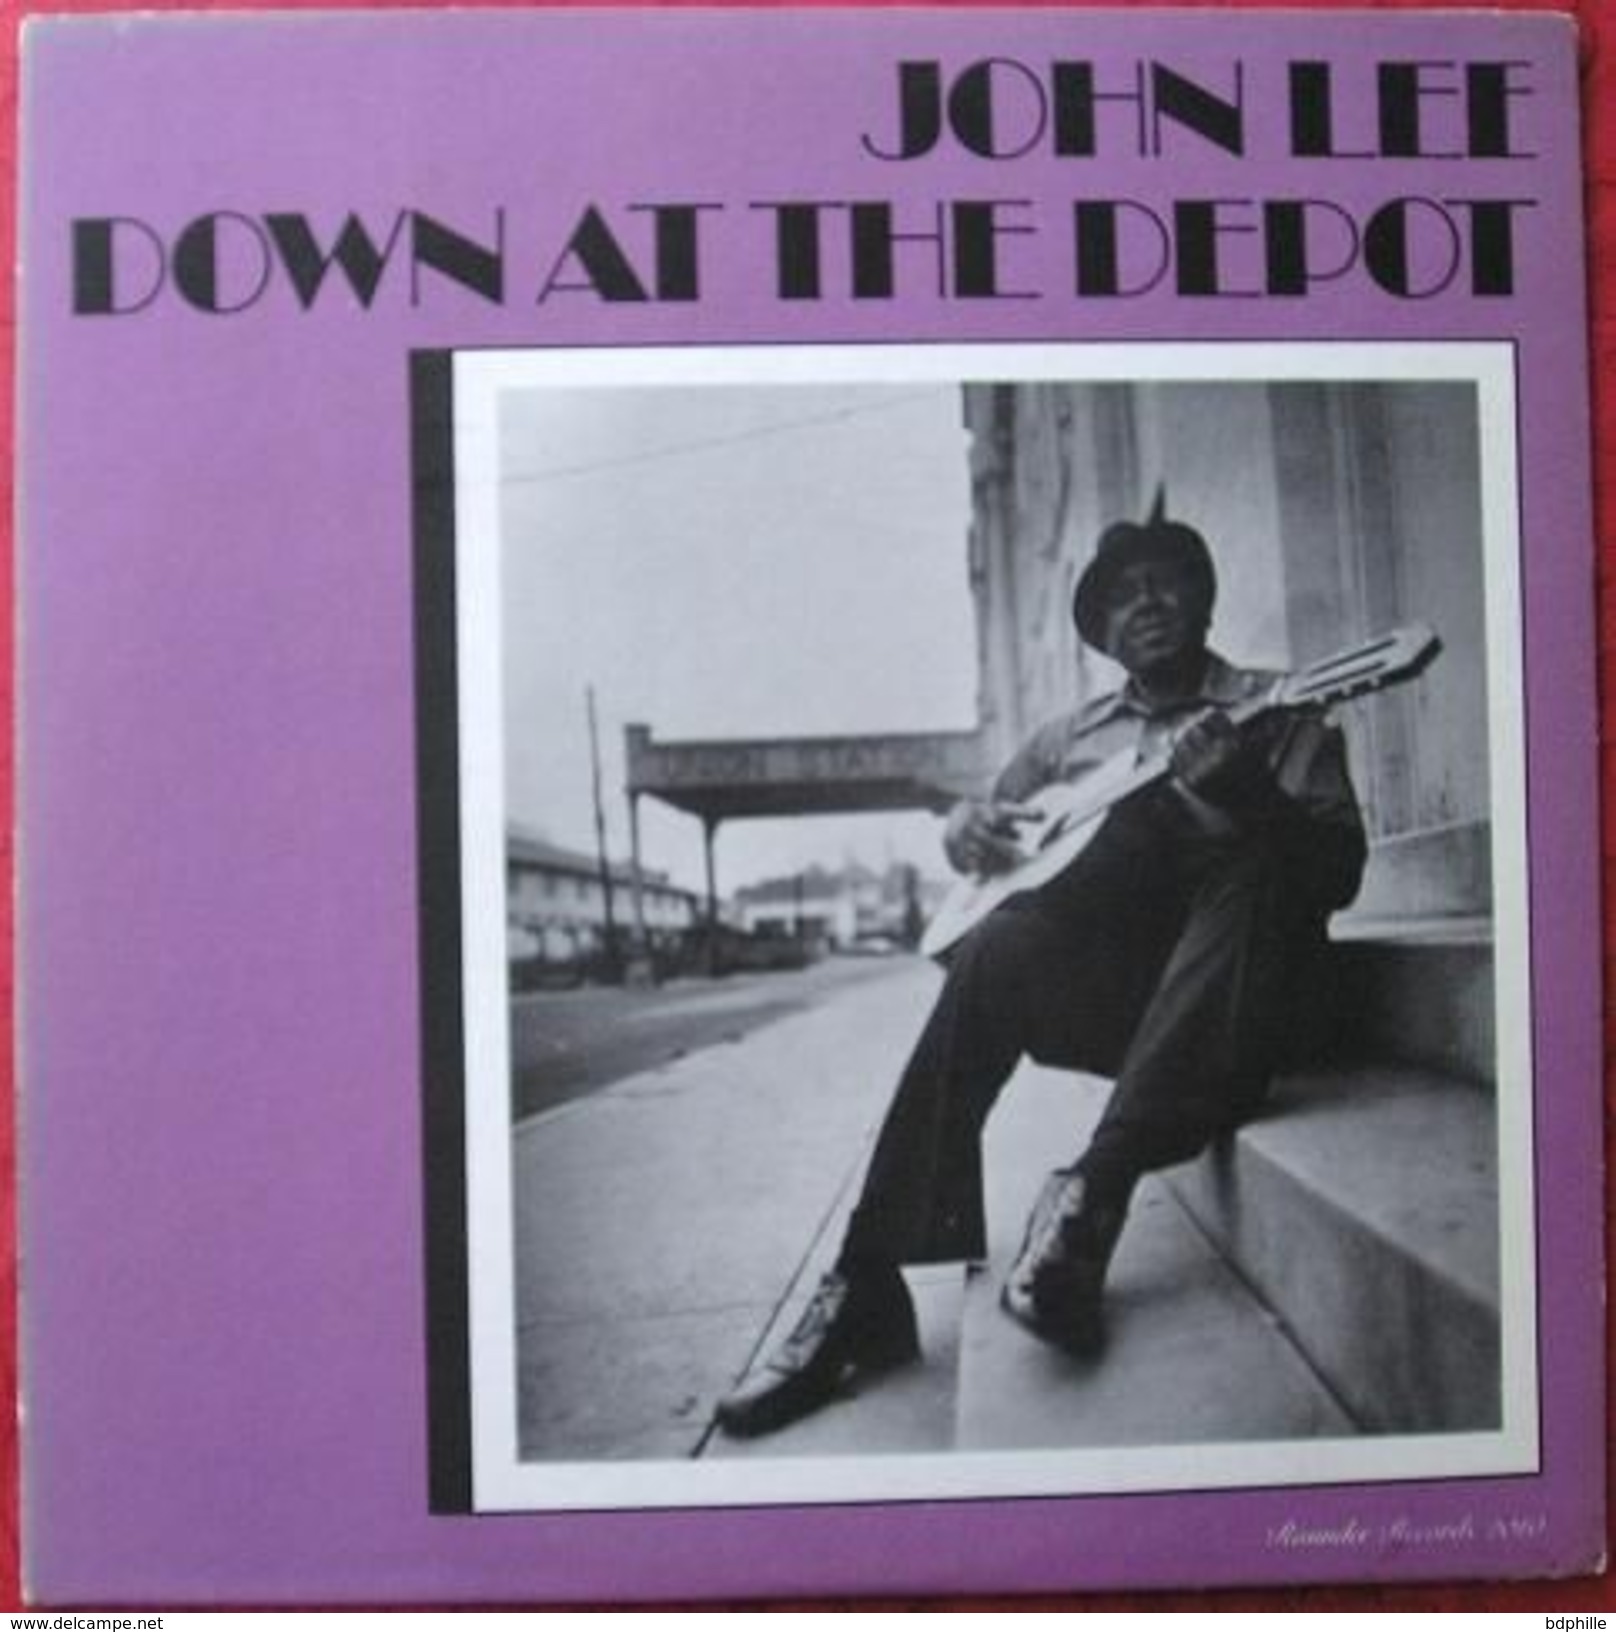 John Lee Down At The Depot  LP 33 - Blues